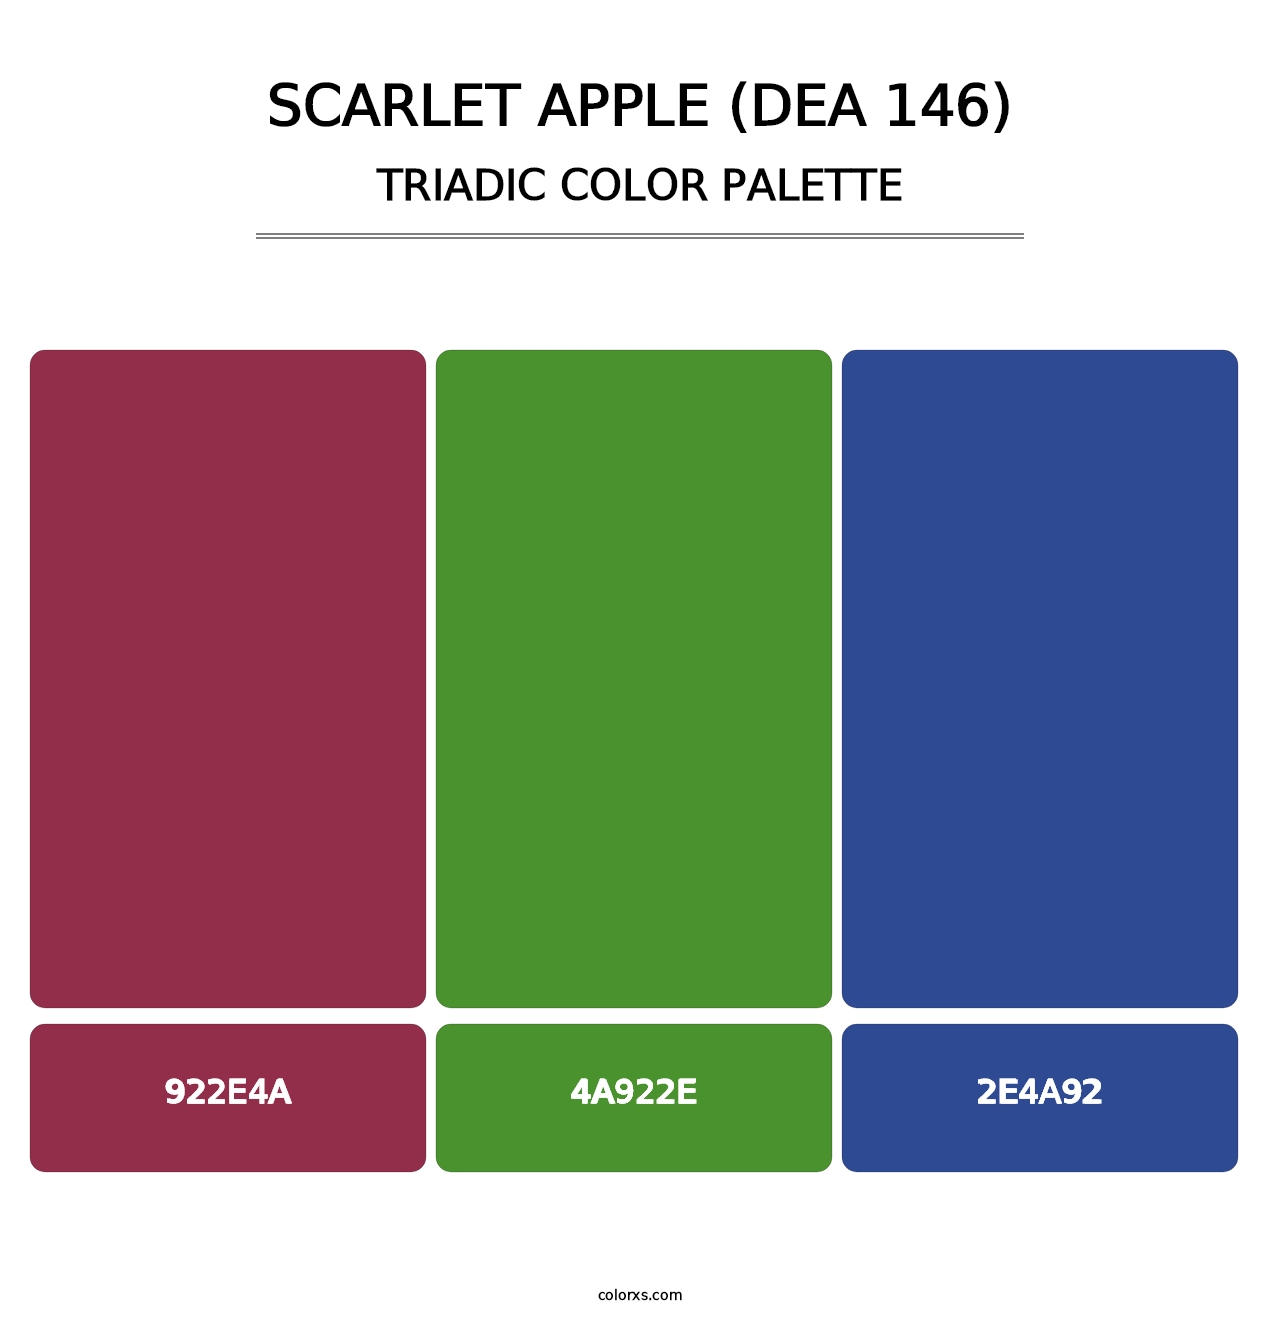 Scarlet Apple (DEA 146) - Triadic Color Palette